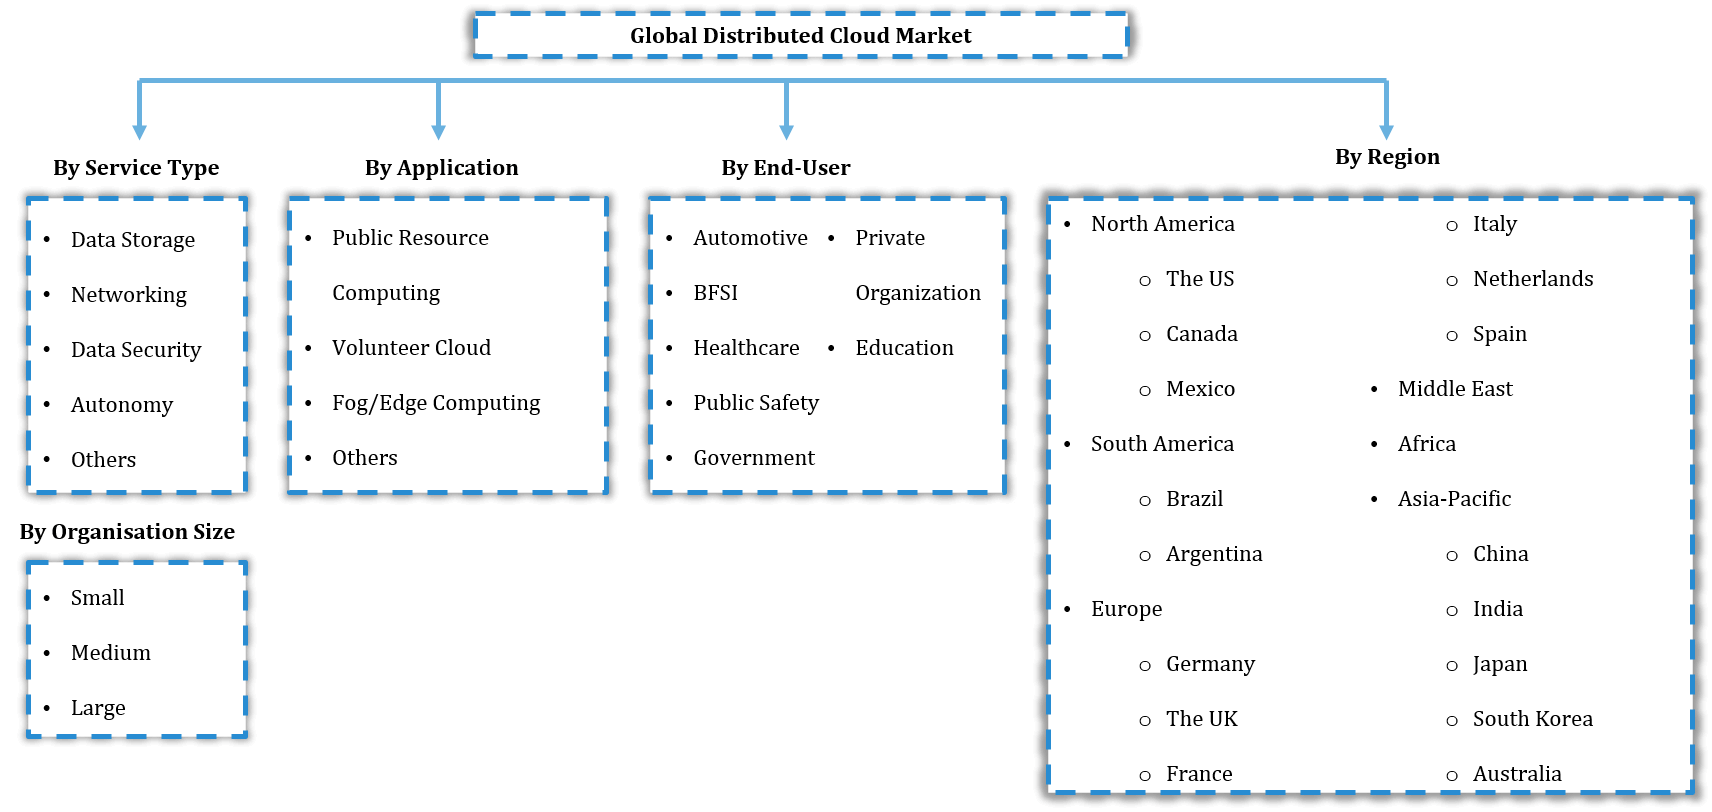 Global Distributed Cloud Market Segmentation